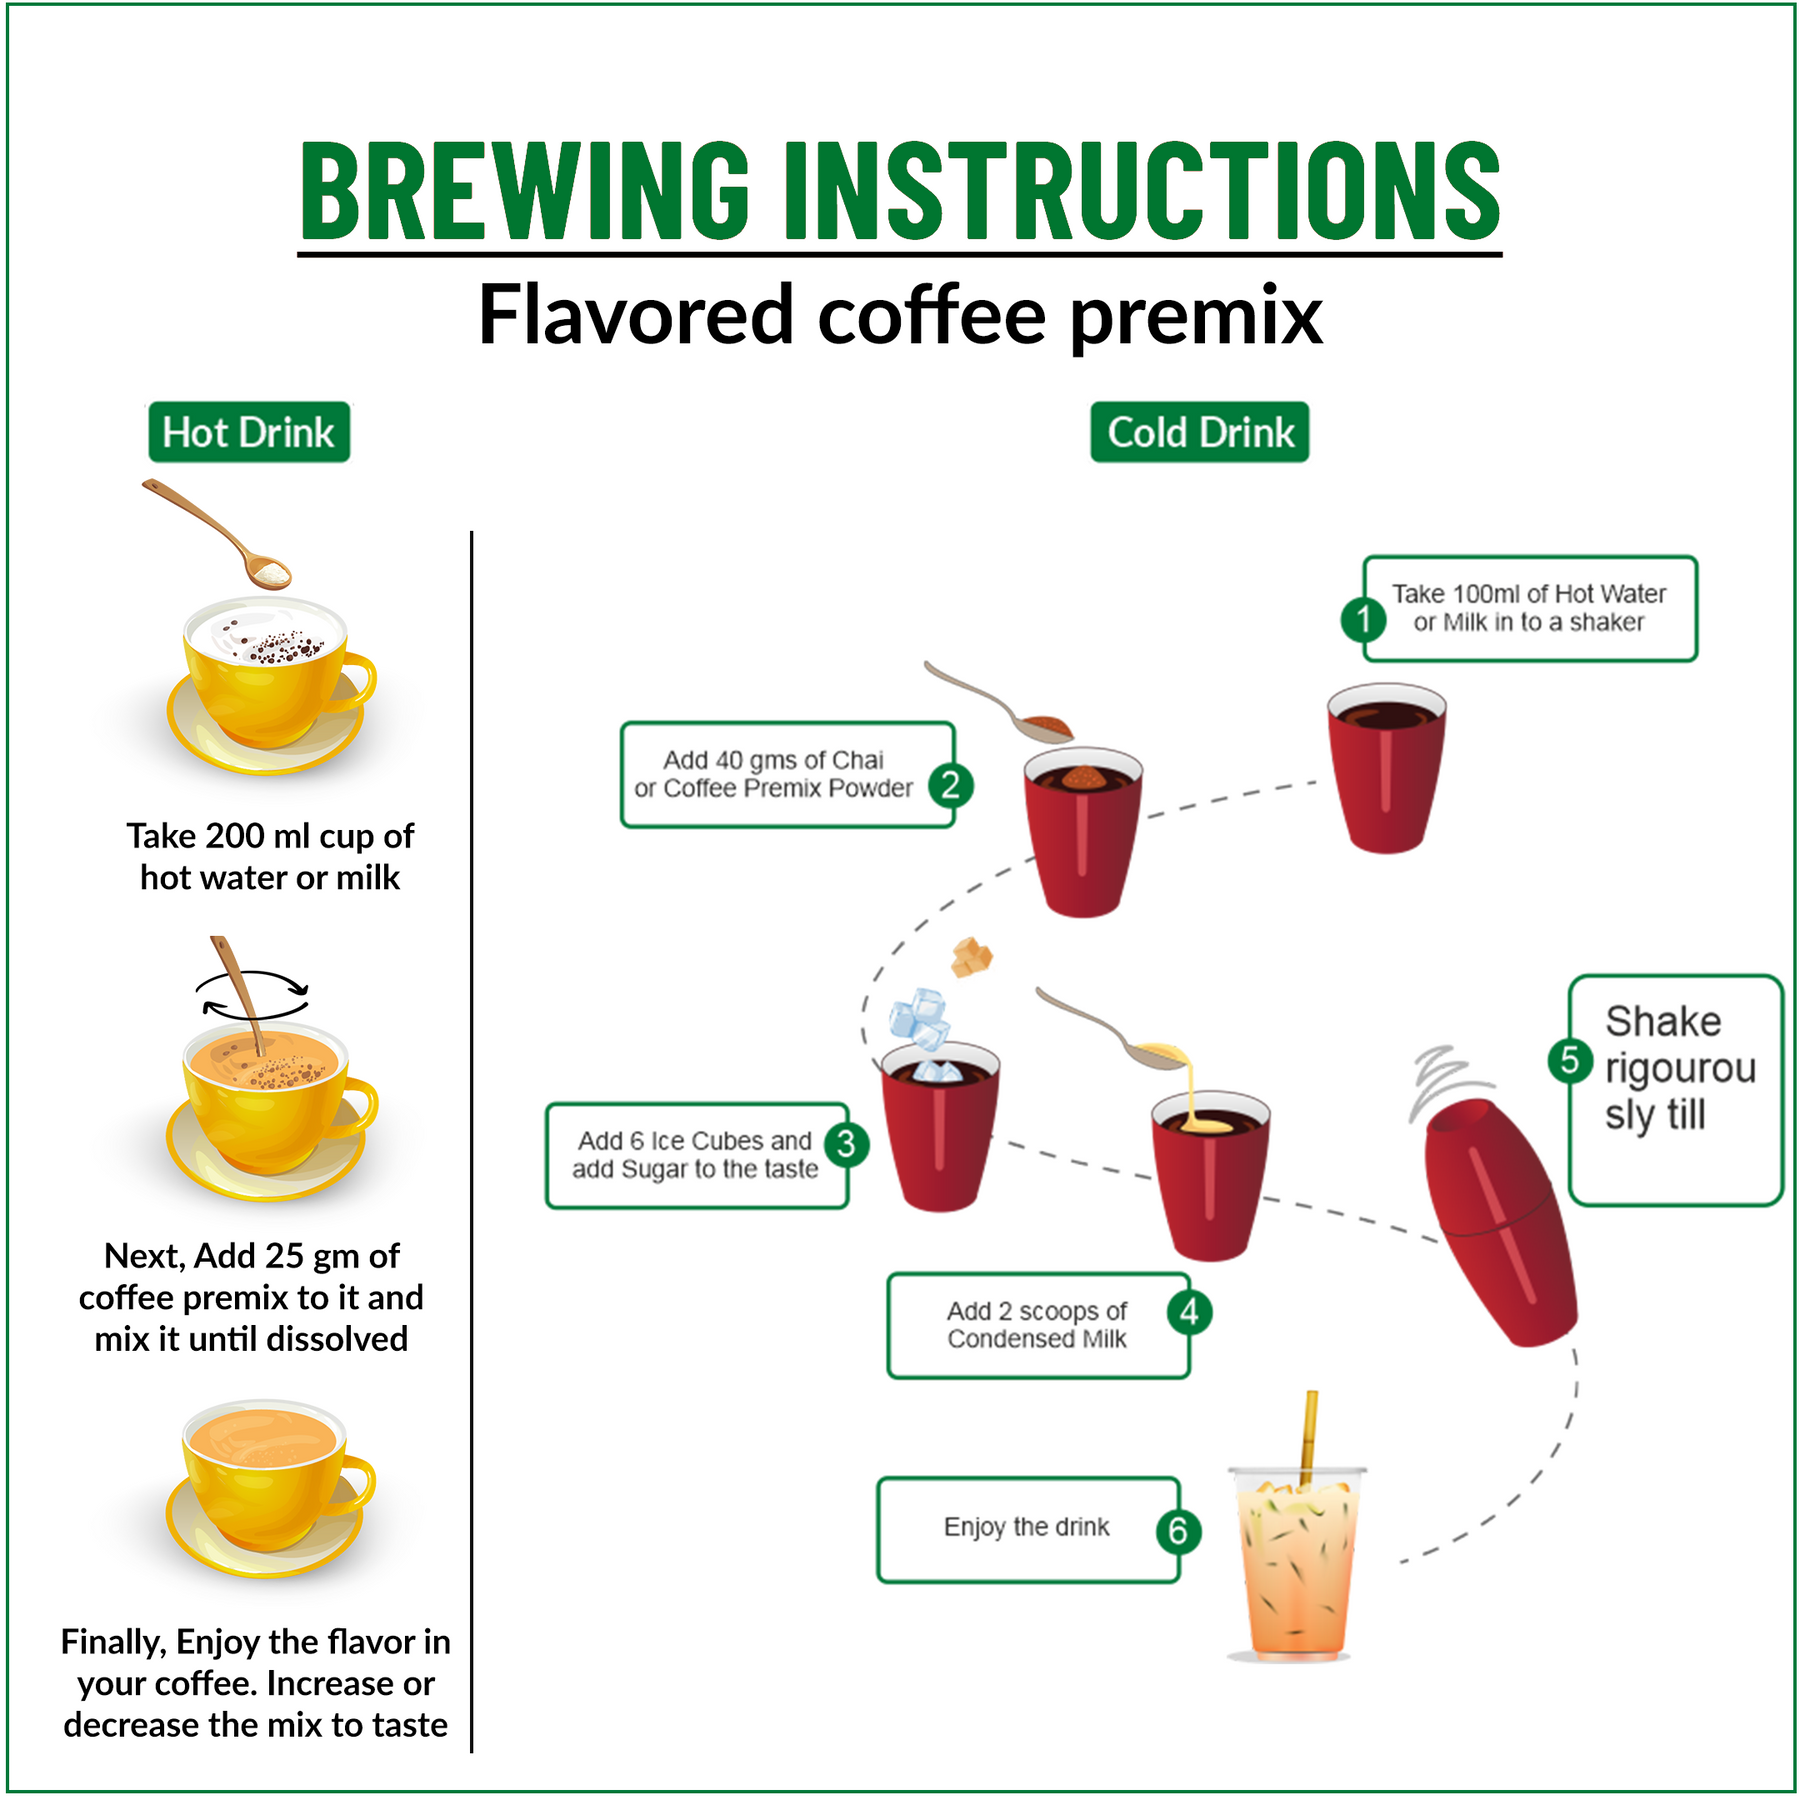 Lemon Coffee Instant Coffee Premix (2 in 1)